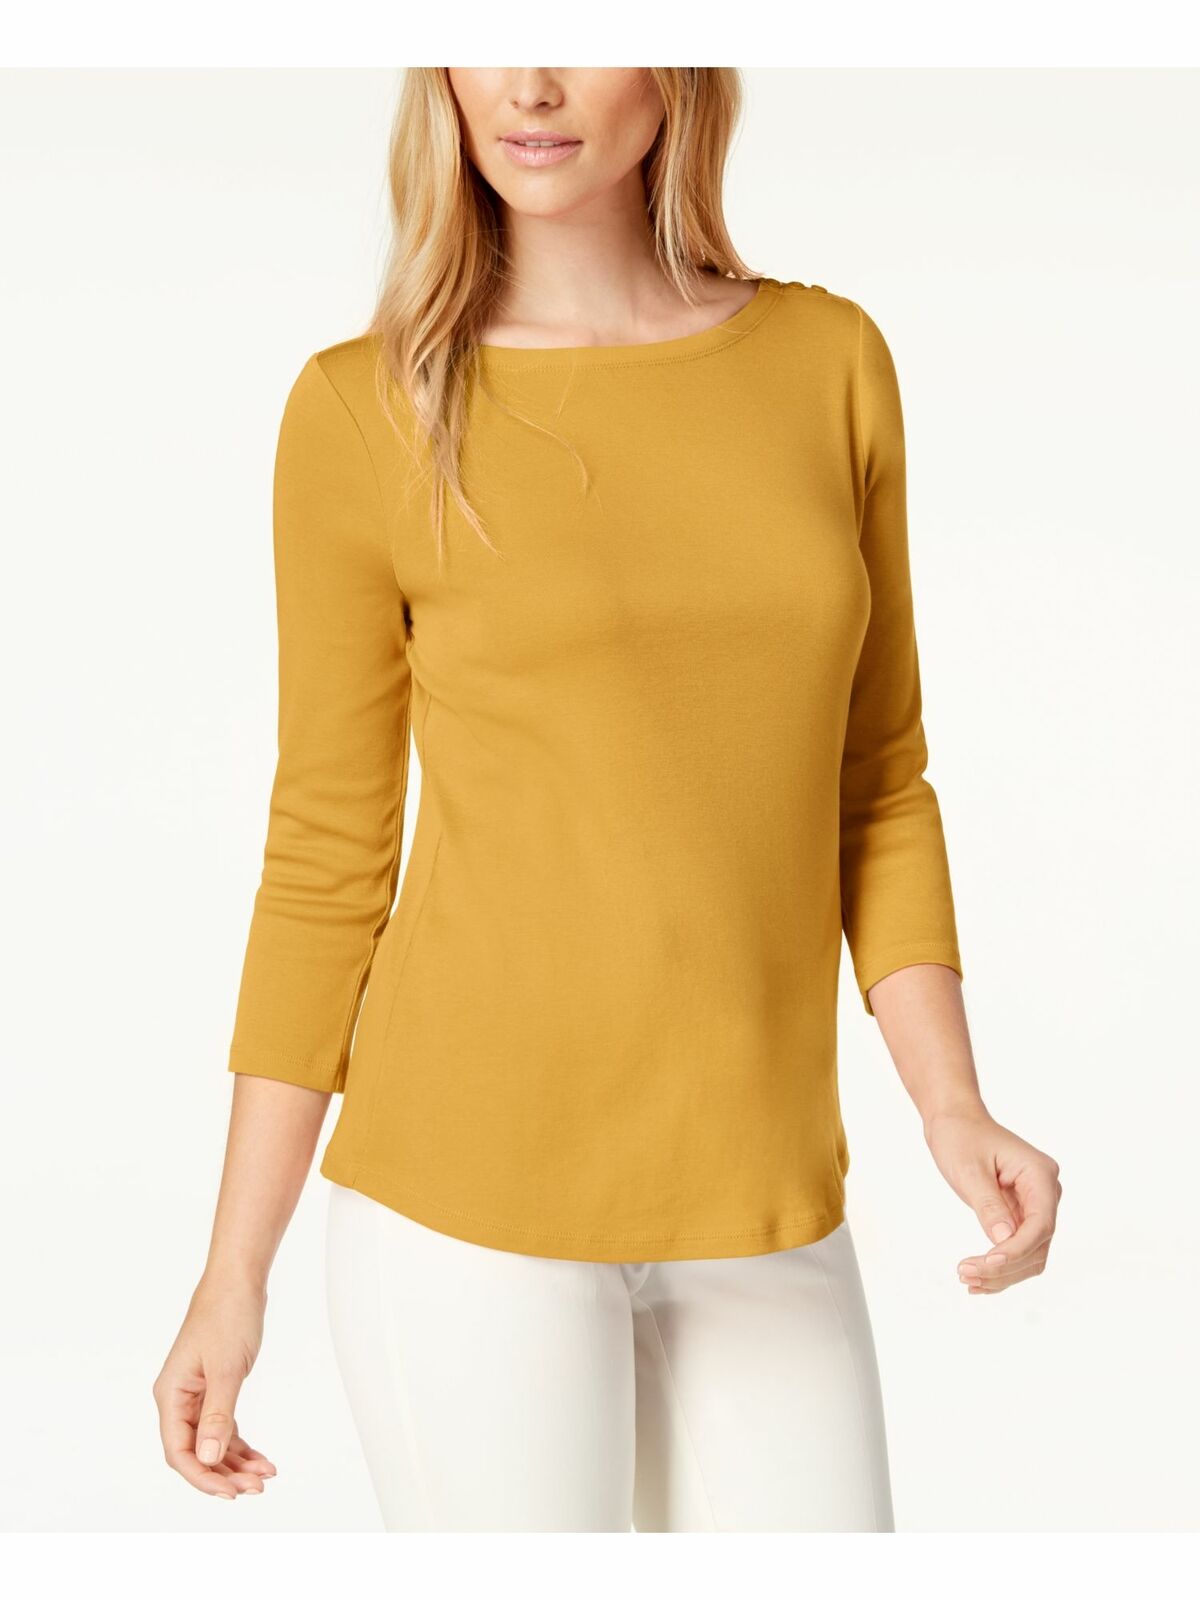 Charter Club Women's Petite Pima Cotton Button-Shoulder Top Yellow Size X-Large